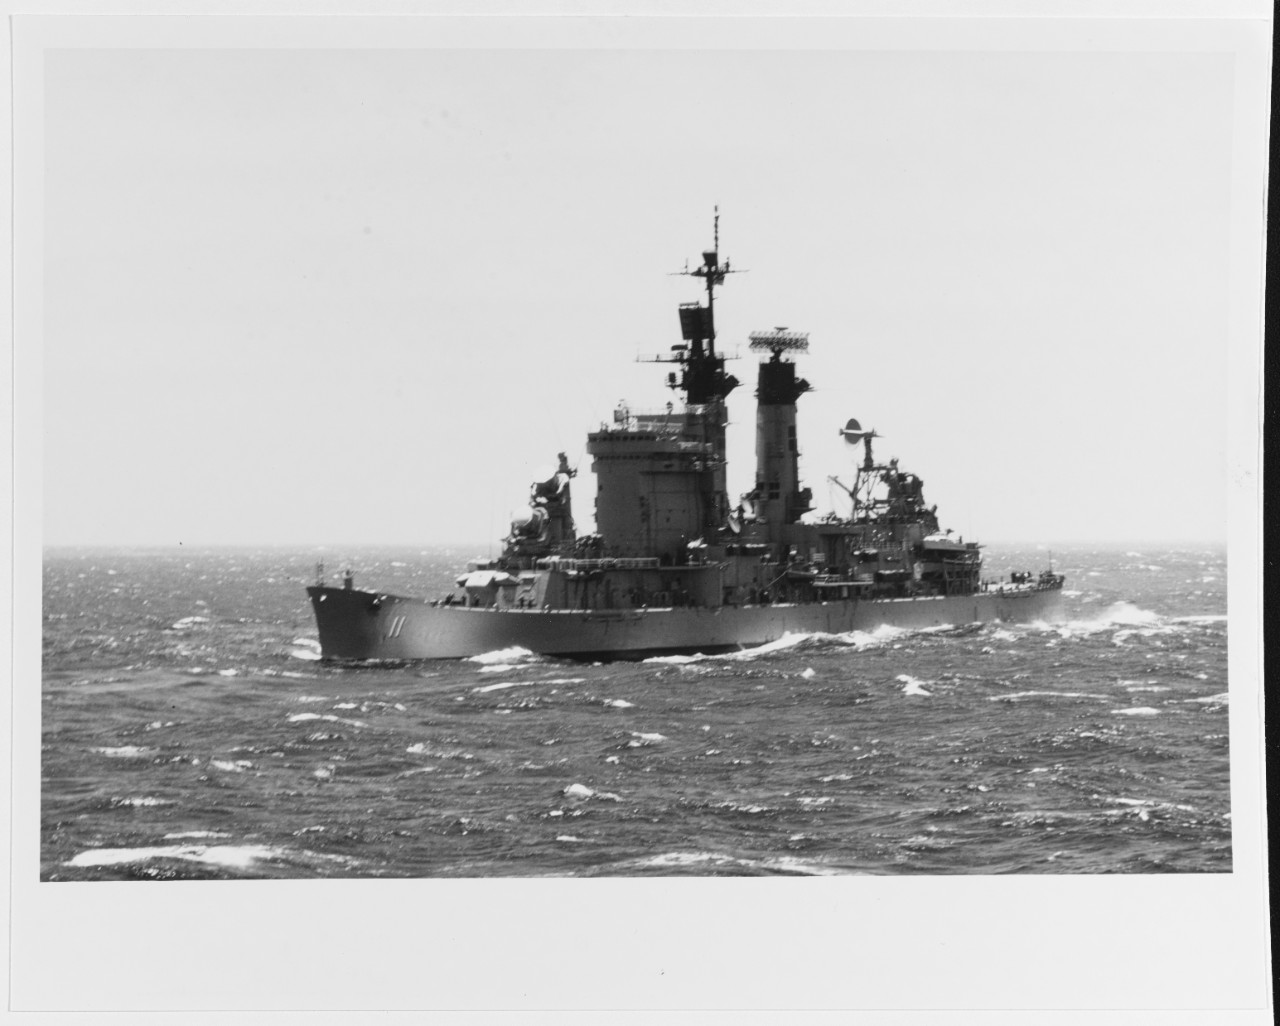 USS CHICAGO (CG-11)